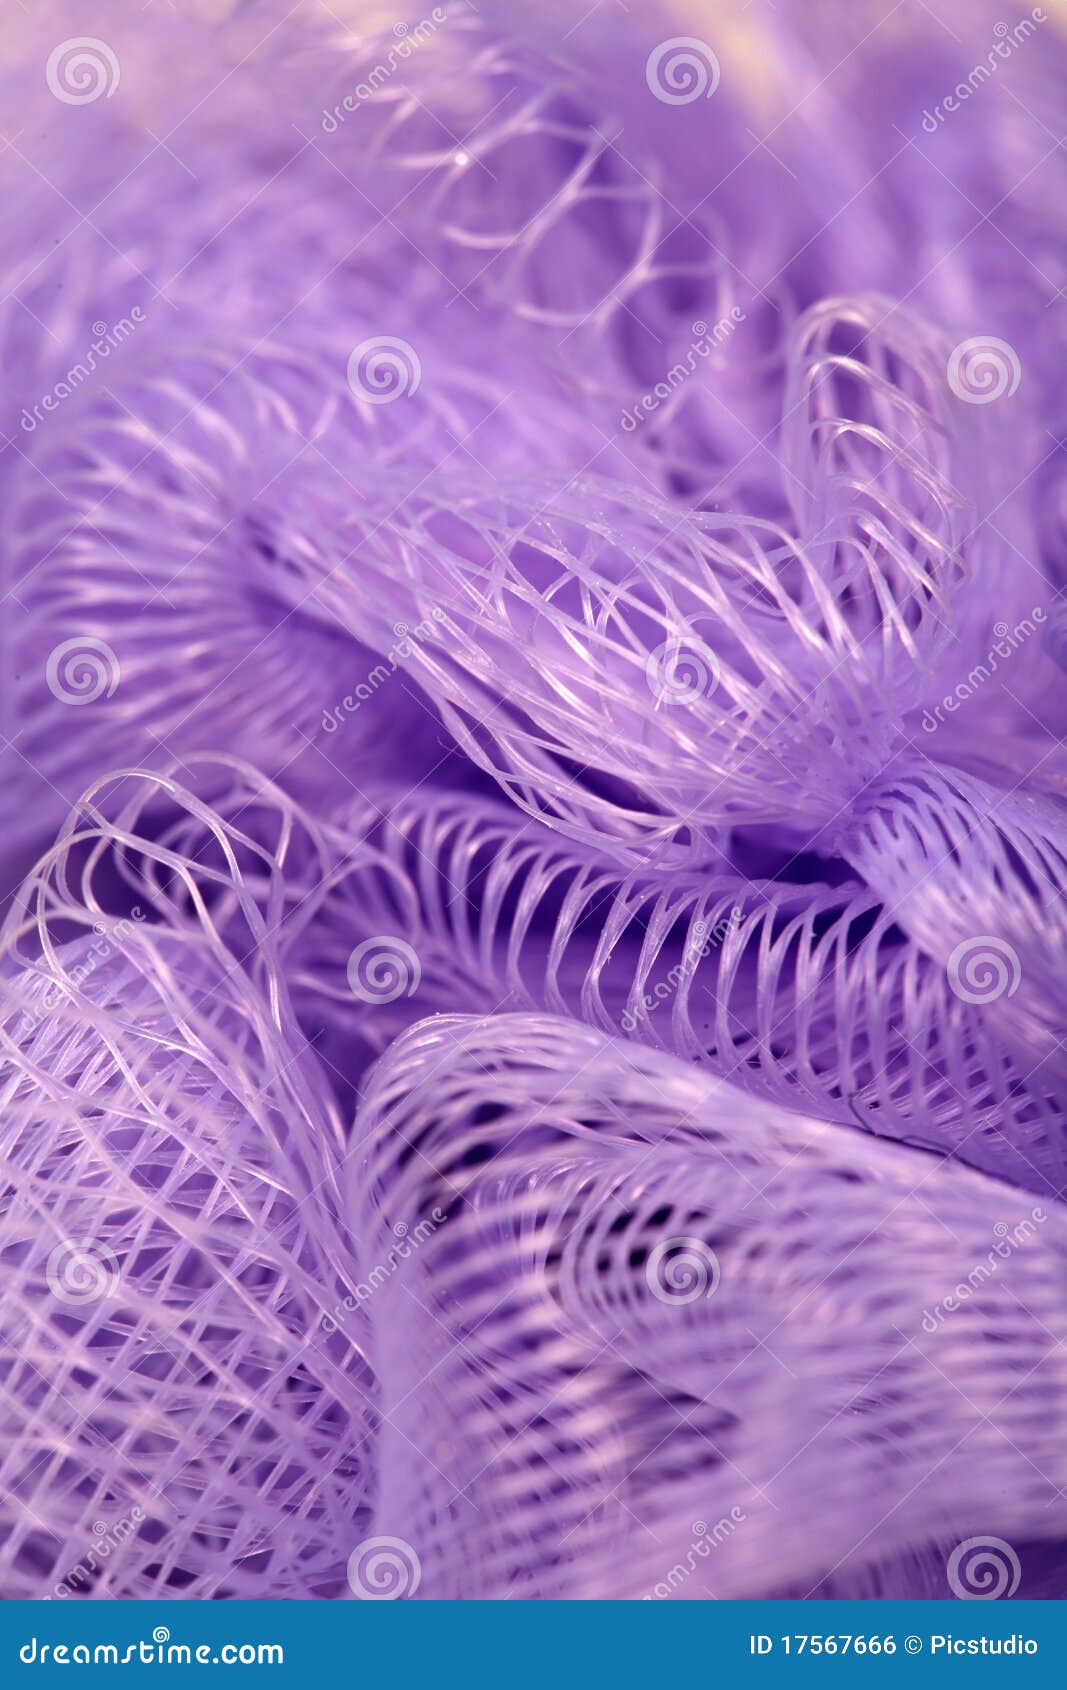 purple nylon net